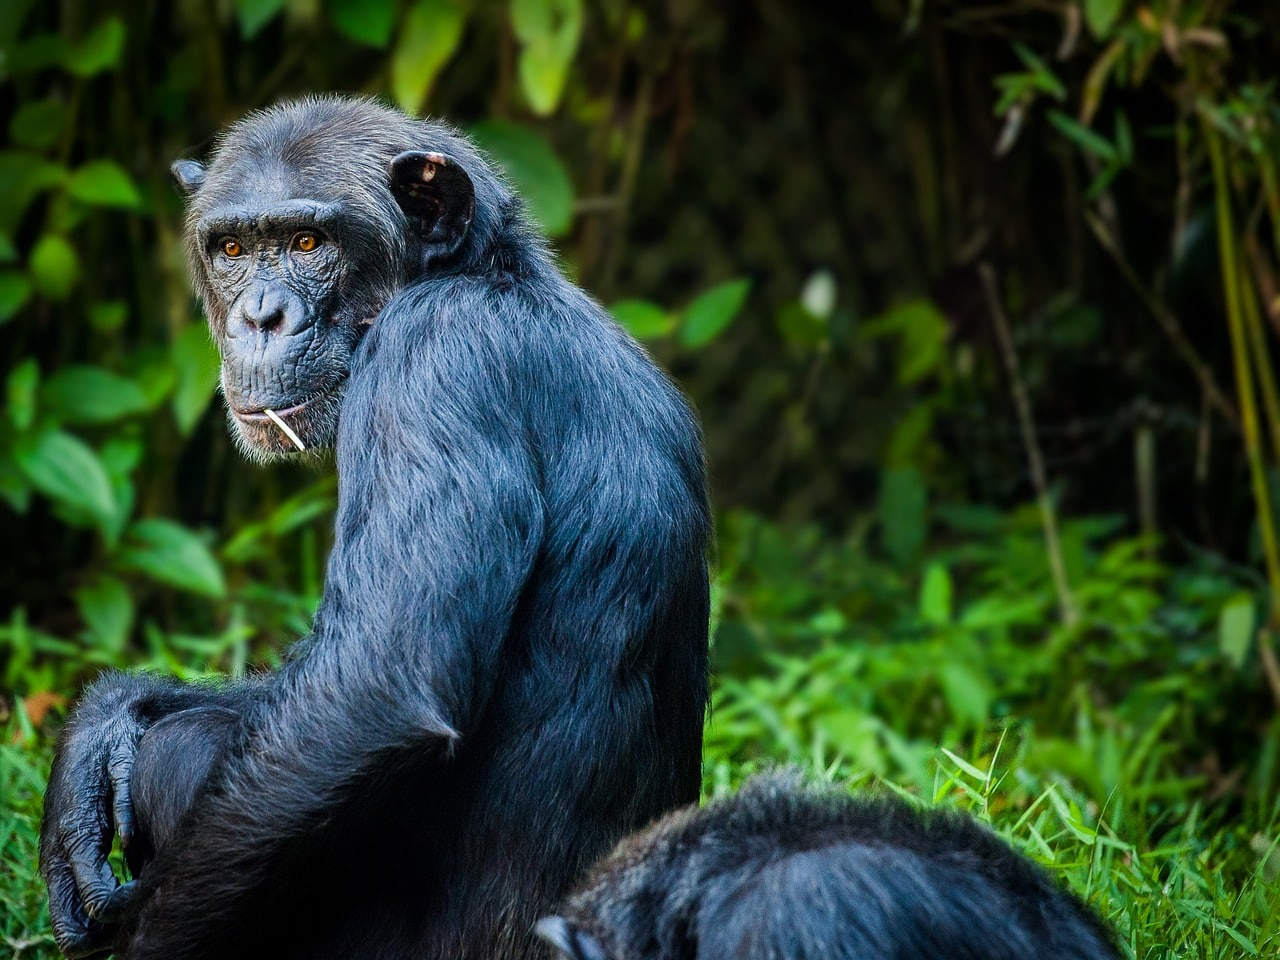 Apes human speech evolution Anglia Ruskin University Neuroscience